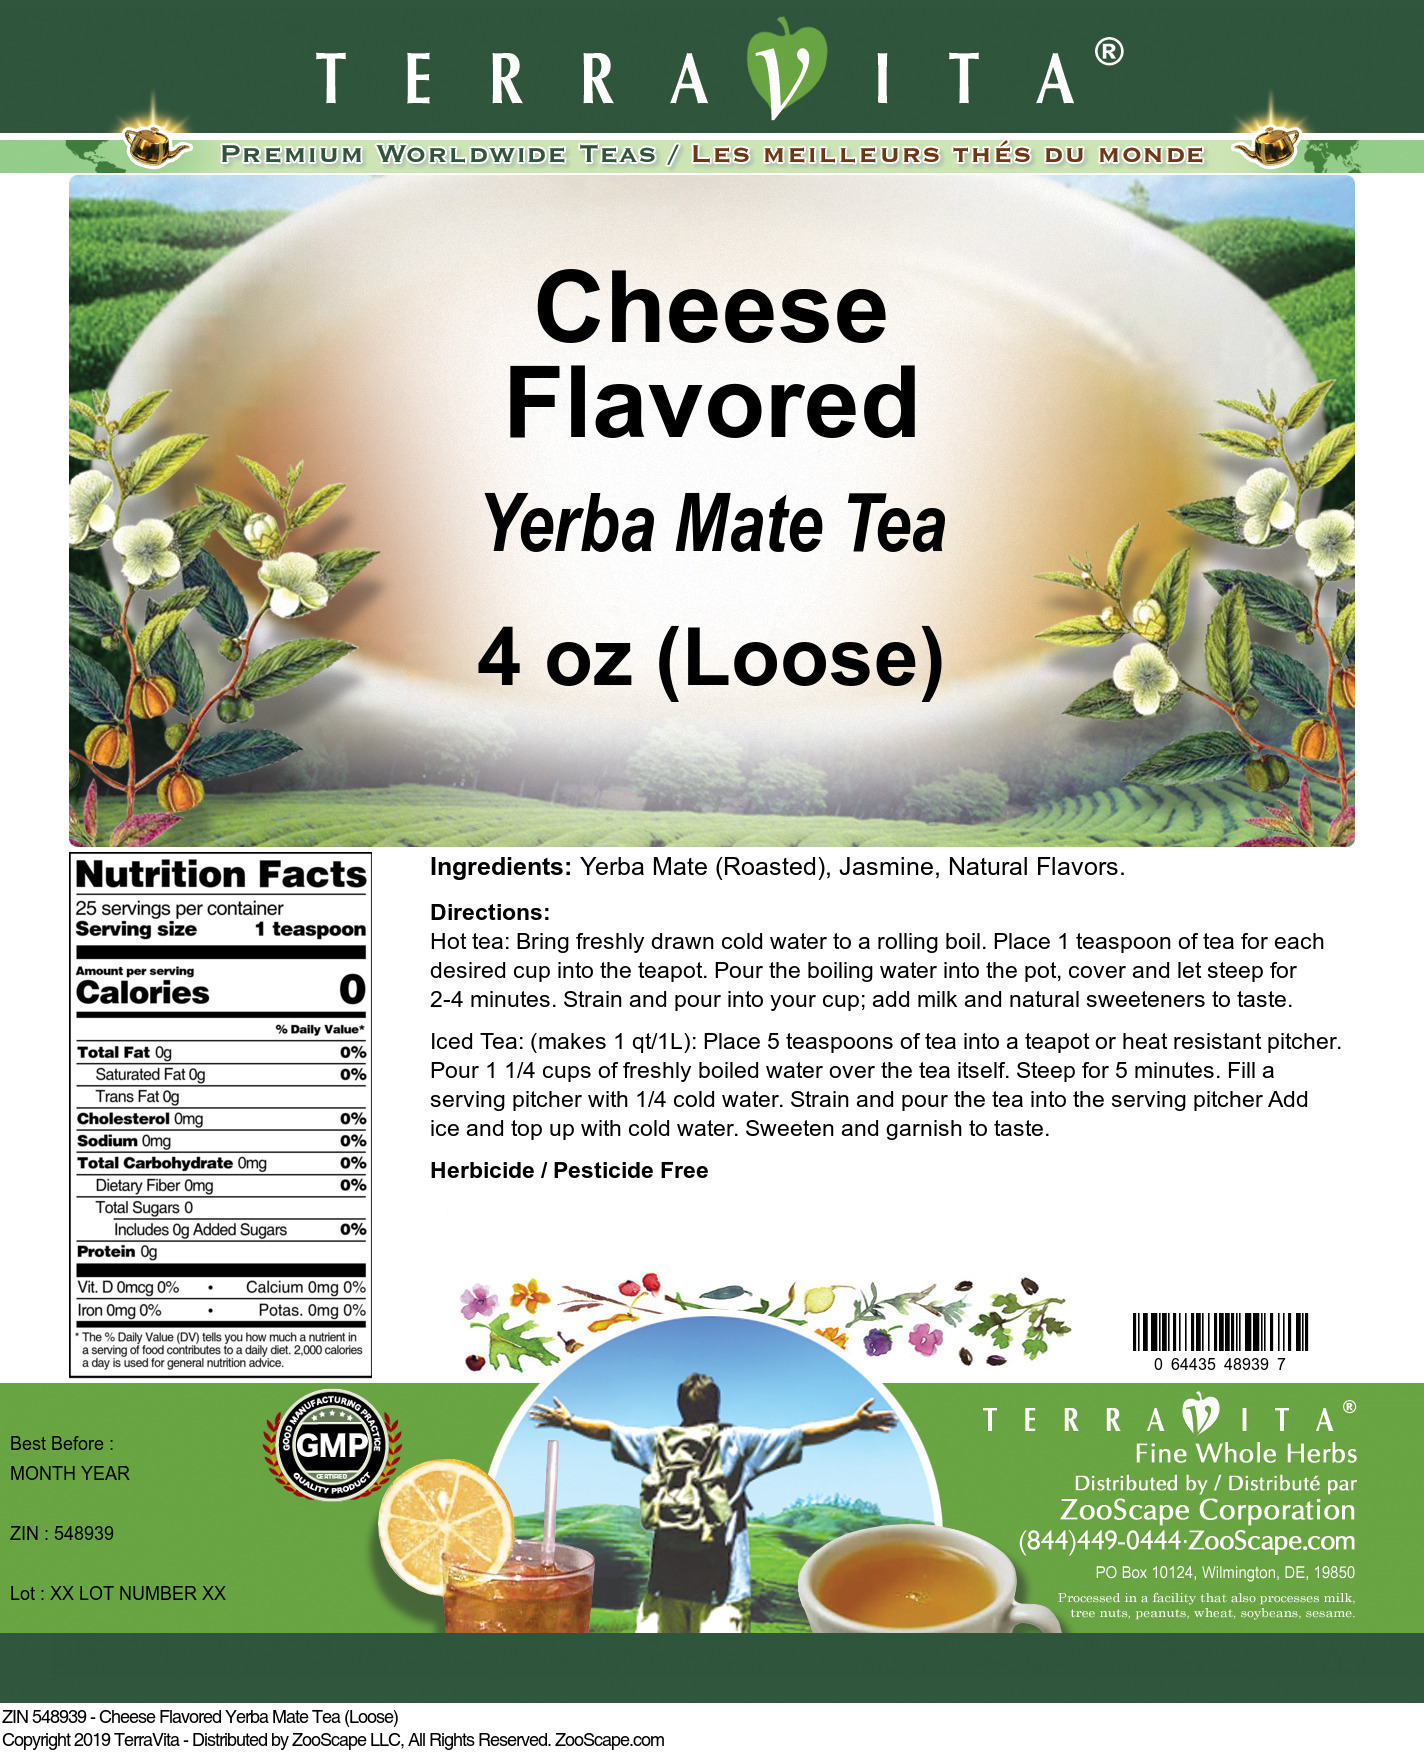 Cheese Flavored Yerba Mate Tea (Loose) - Label